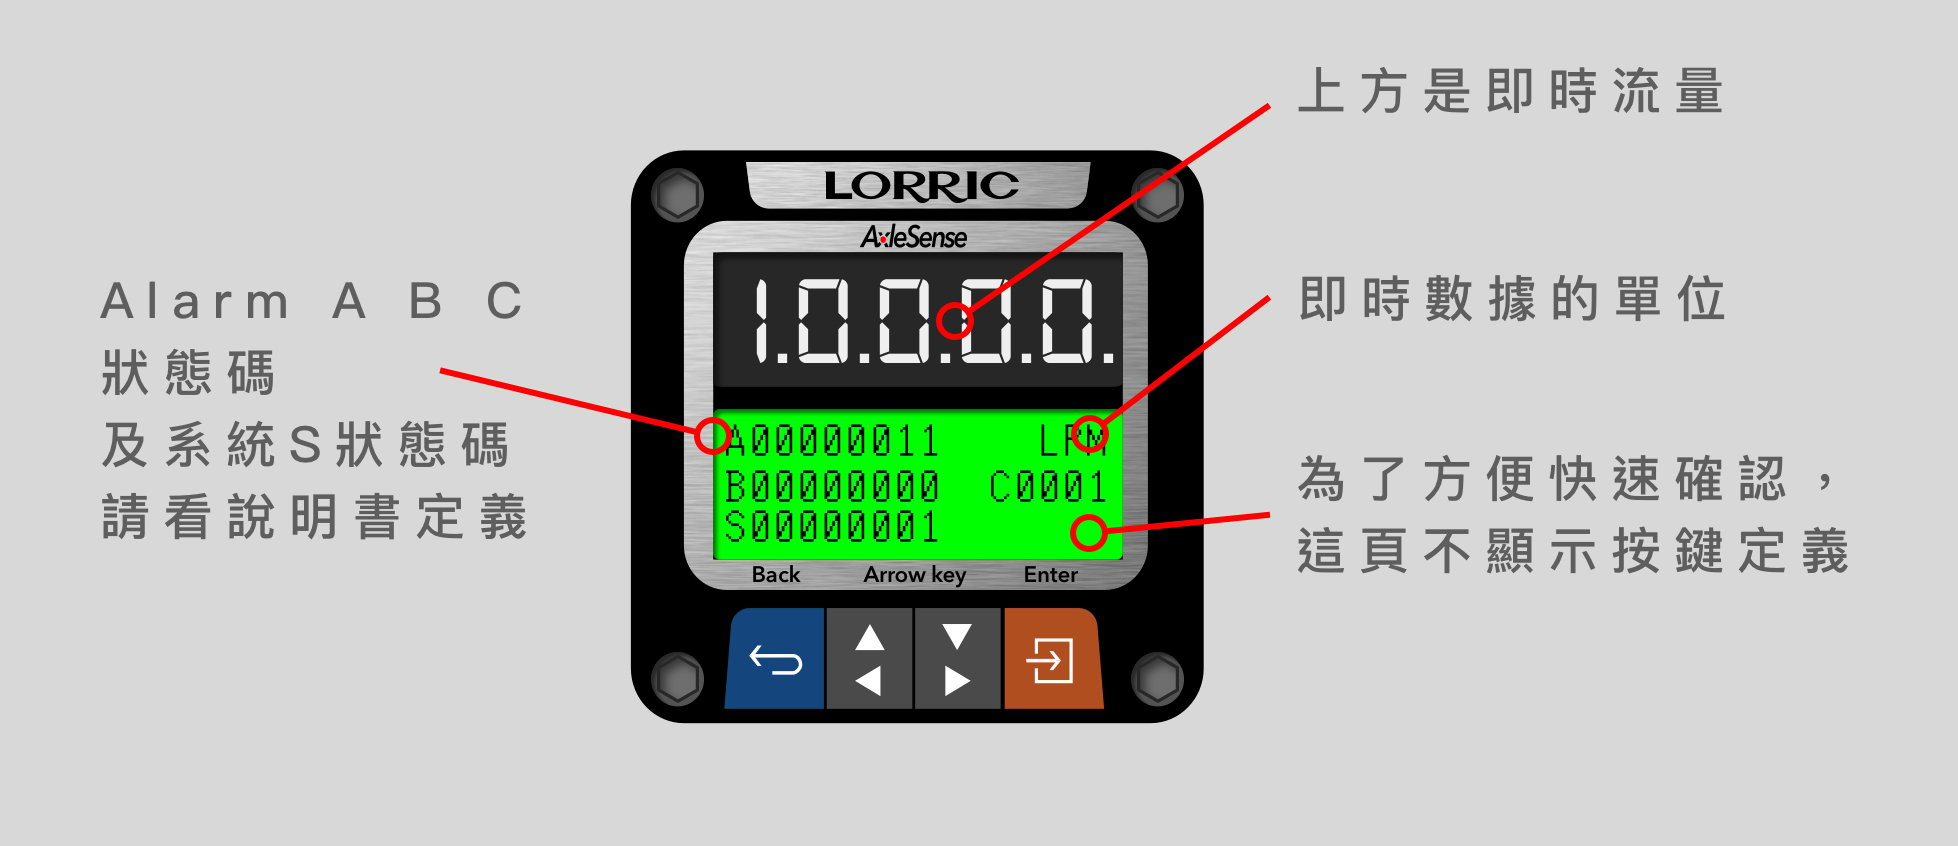 Lorric AxleSense 蹼輪式流量計 Alarm及系統狀態說明